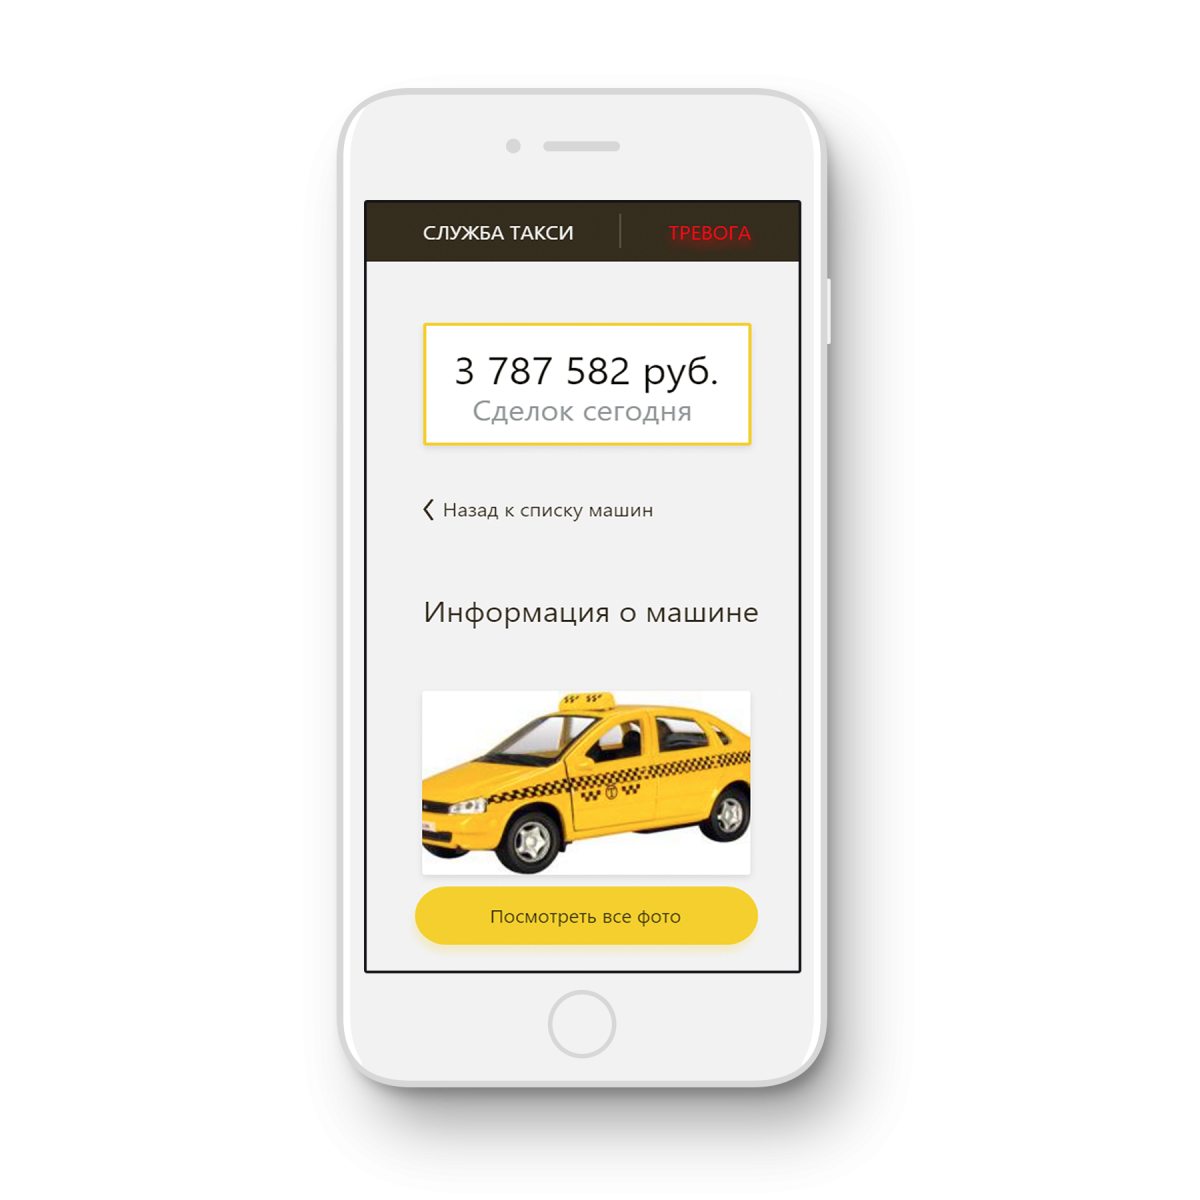 Заказ такси без телефона. Приложение такси. Реклама приложения такси. Мобильное приложение такси.